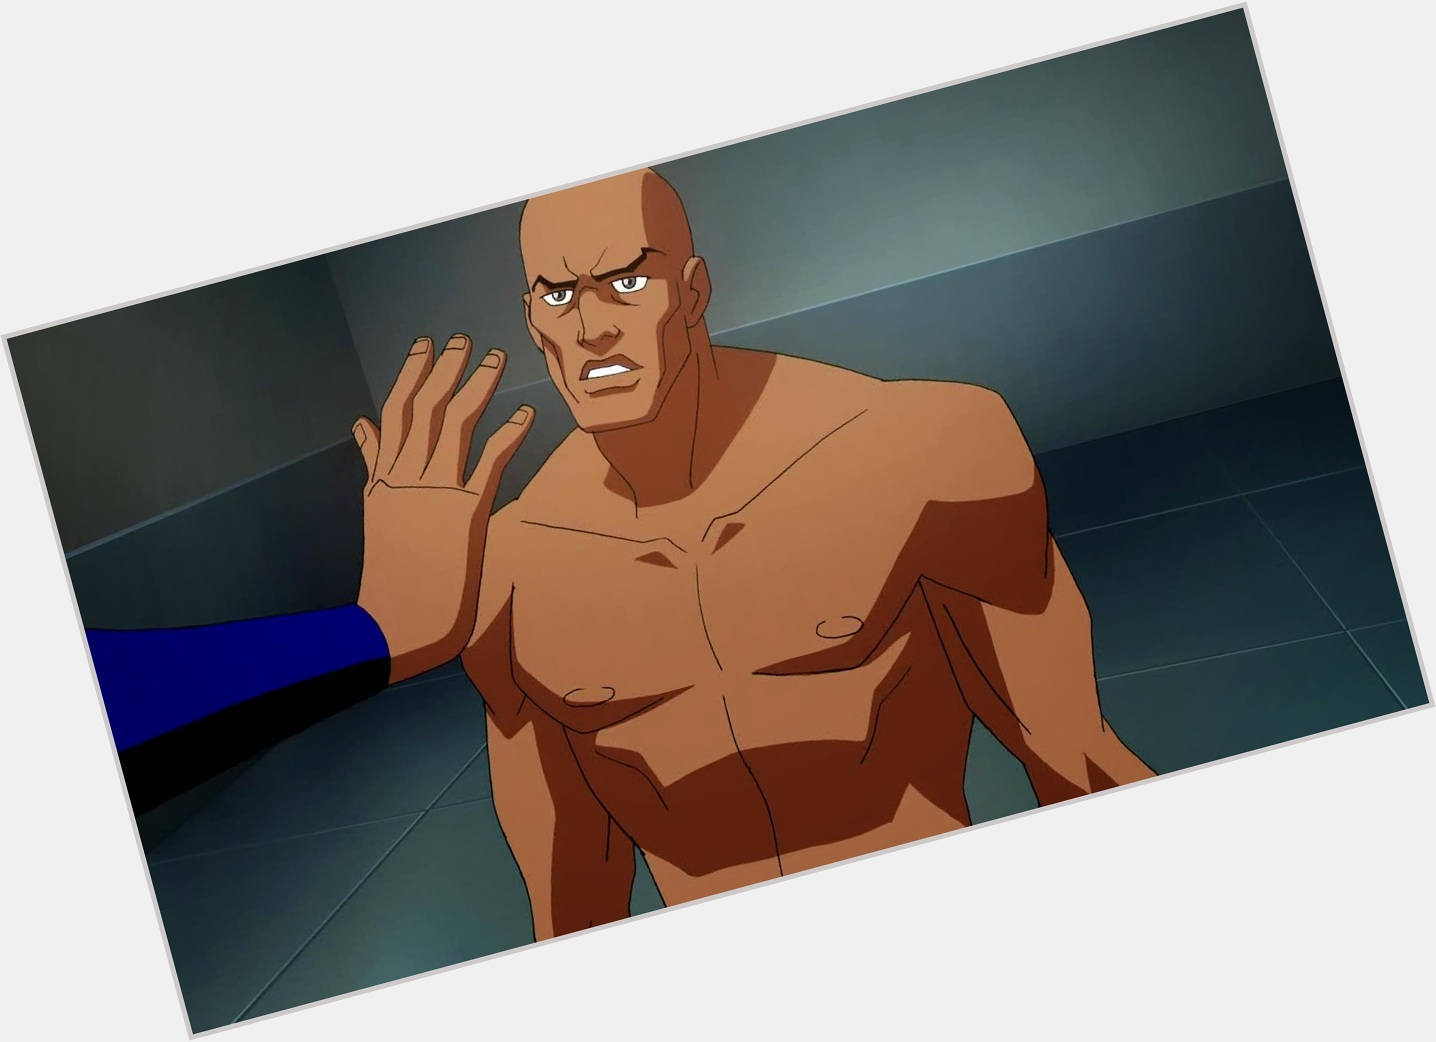 Lex Luthor shirtless bikini